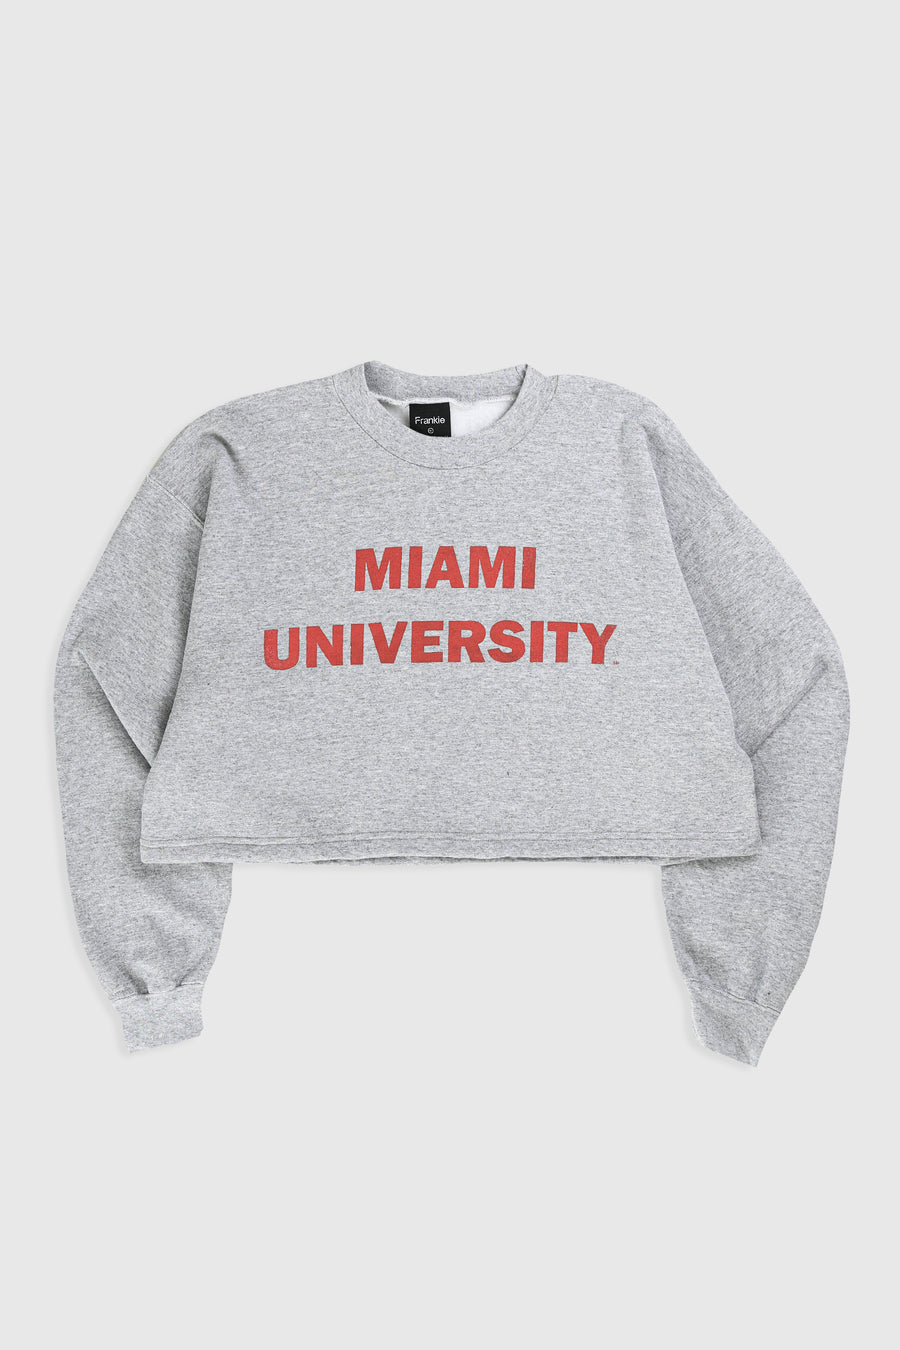 Rework Miami University Crop Sweatshirt - XL